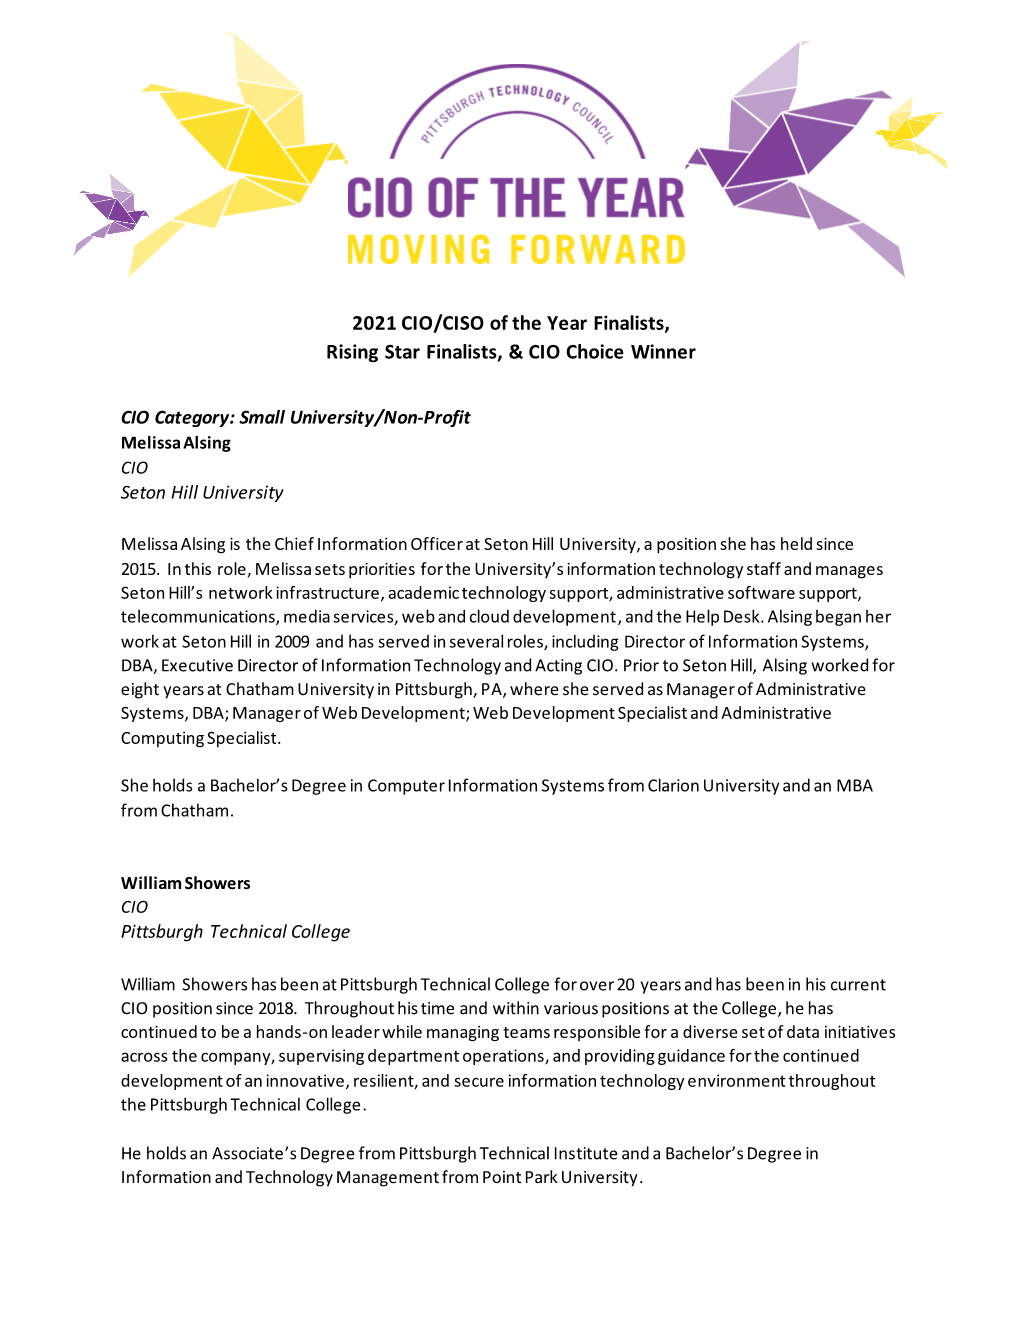 2021 CIO/CISO of the Year Finalists, Rising Star Finalists, & CIO Choice